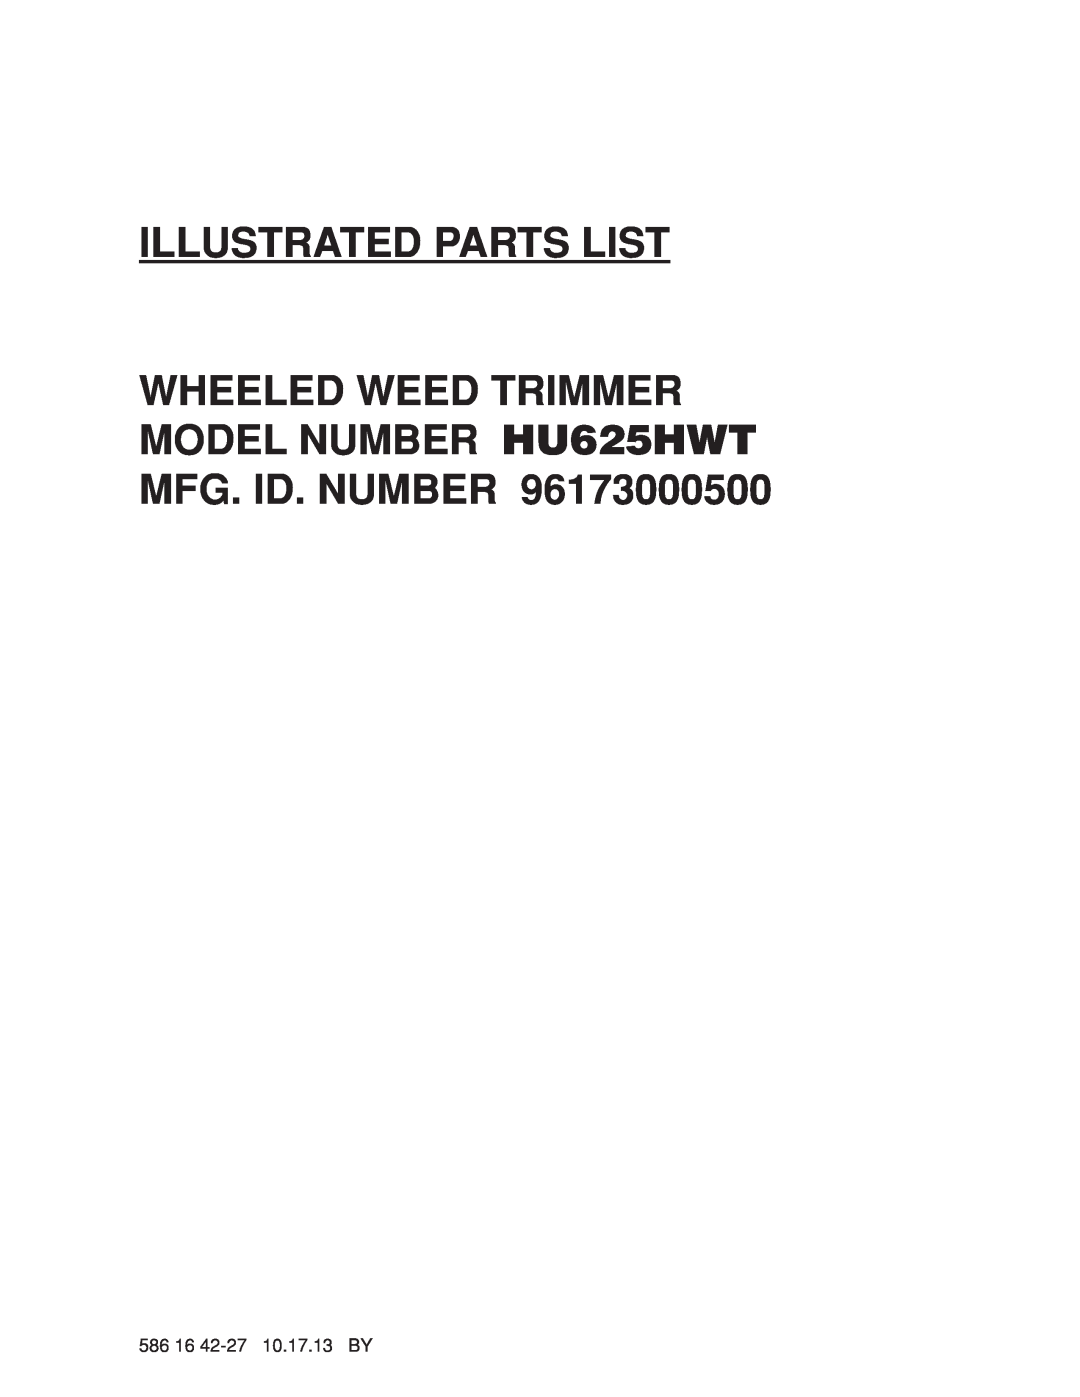 Husqvarna 961730005 manual Illustrated Parts List, WHEELED WEED TRIMMER MODEL NUMBER HU625HWT MFG. ID. NUMBER 